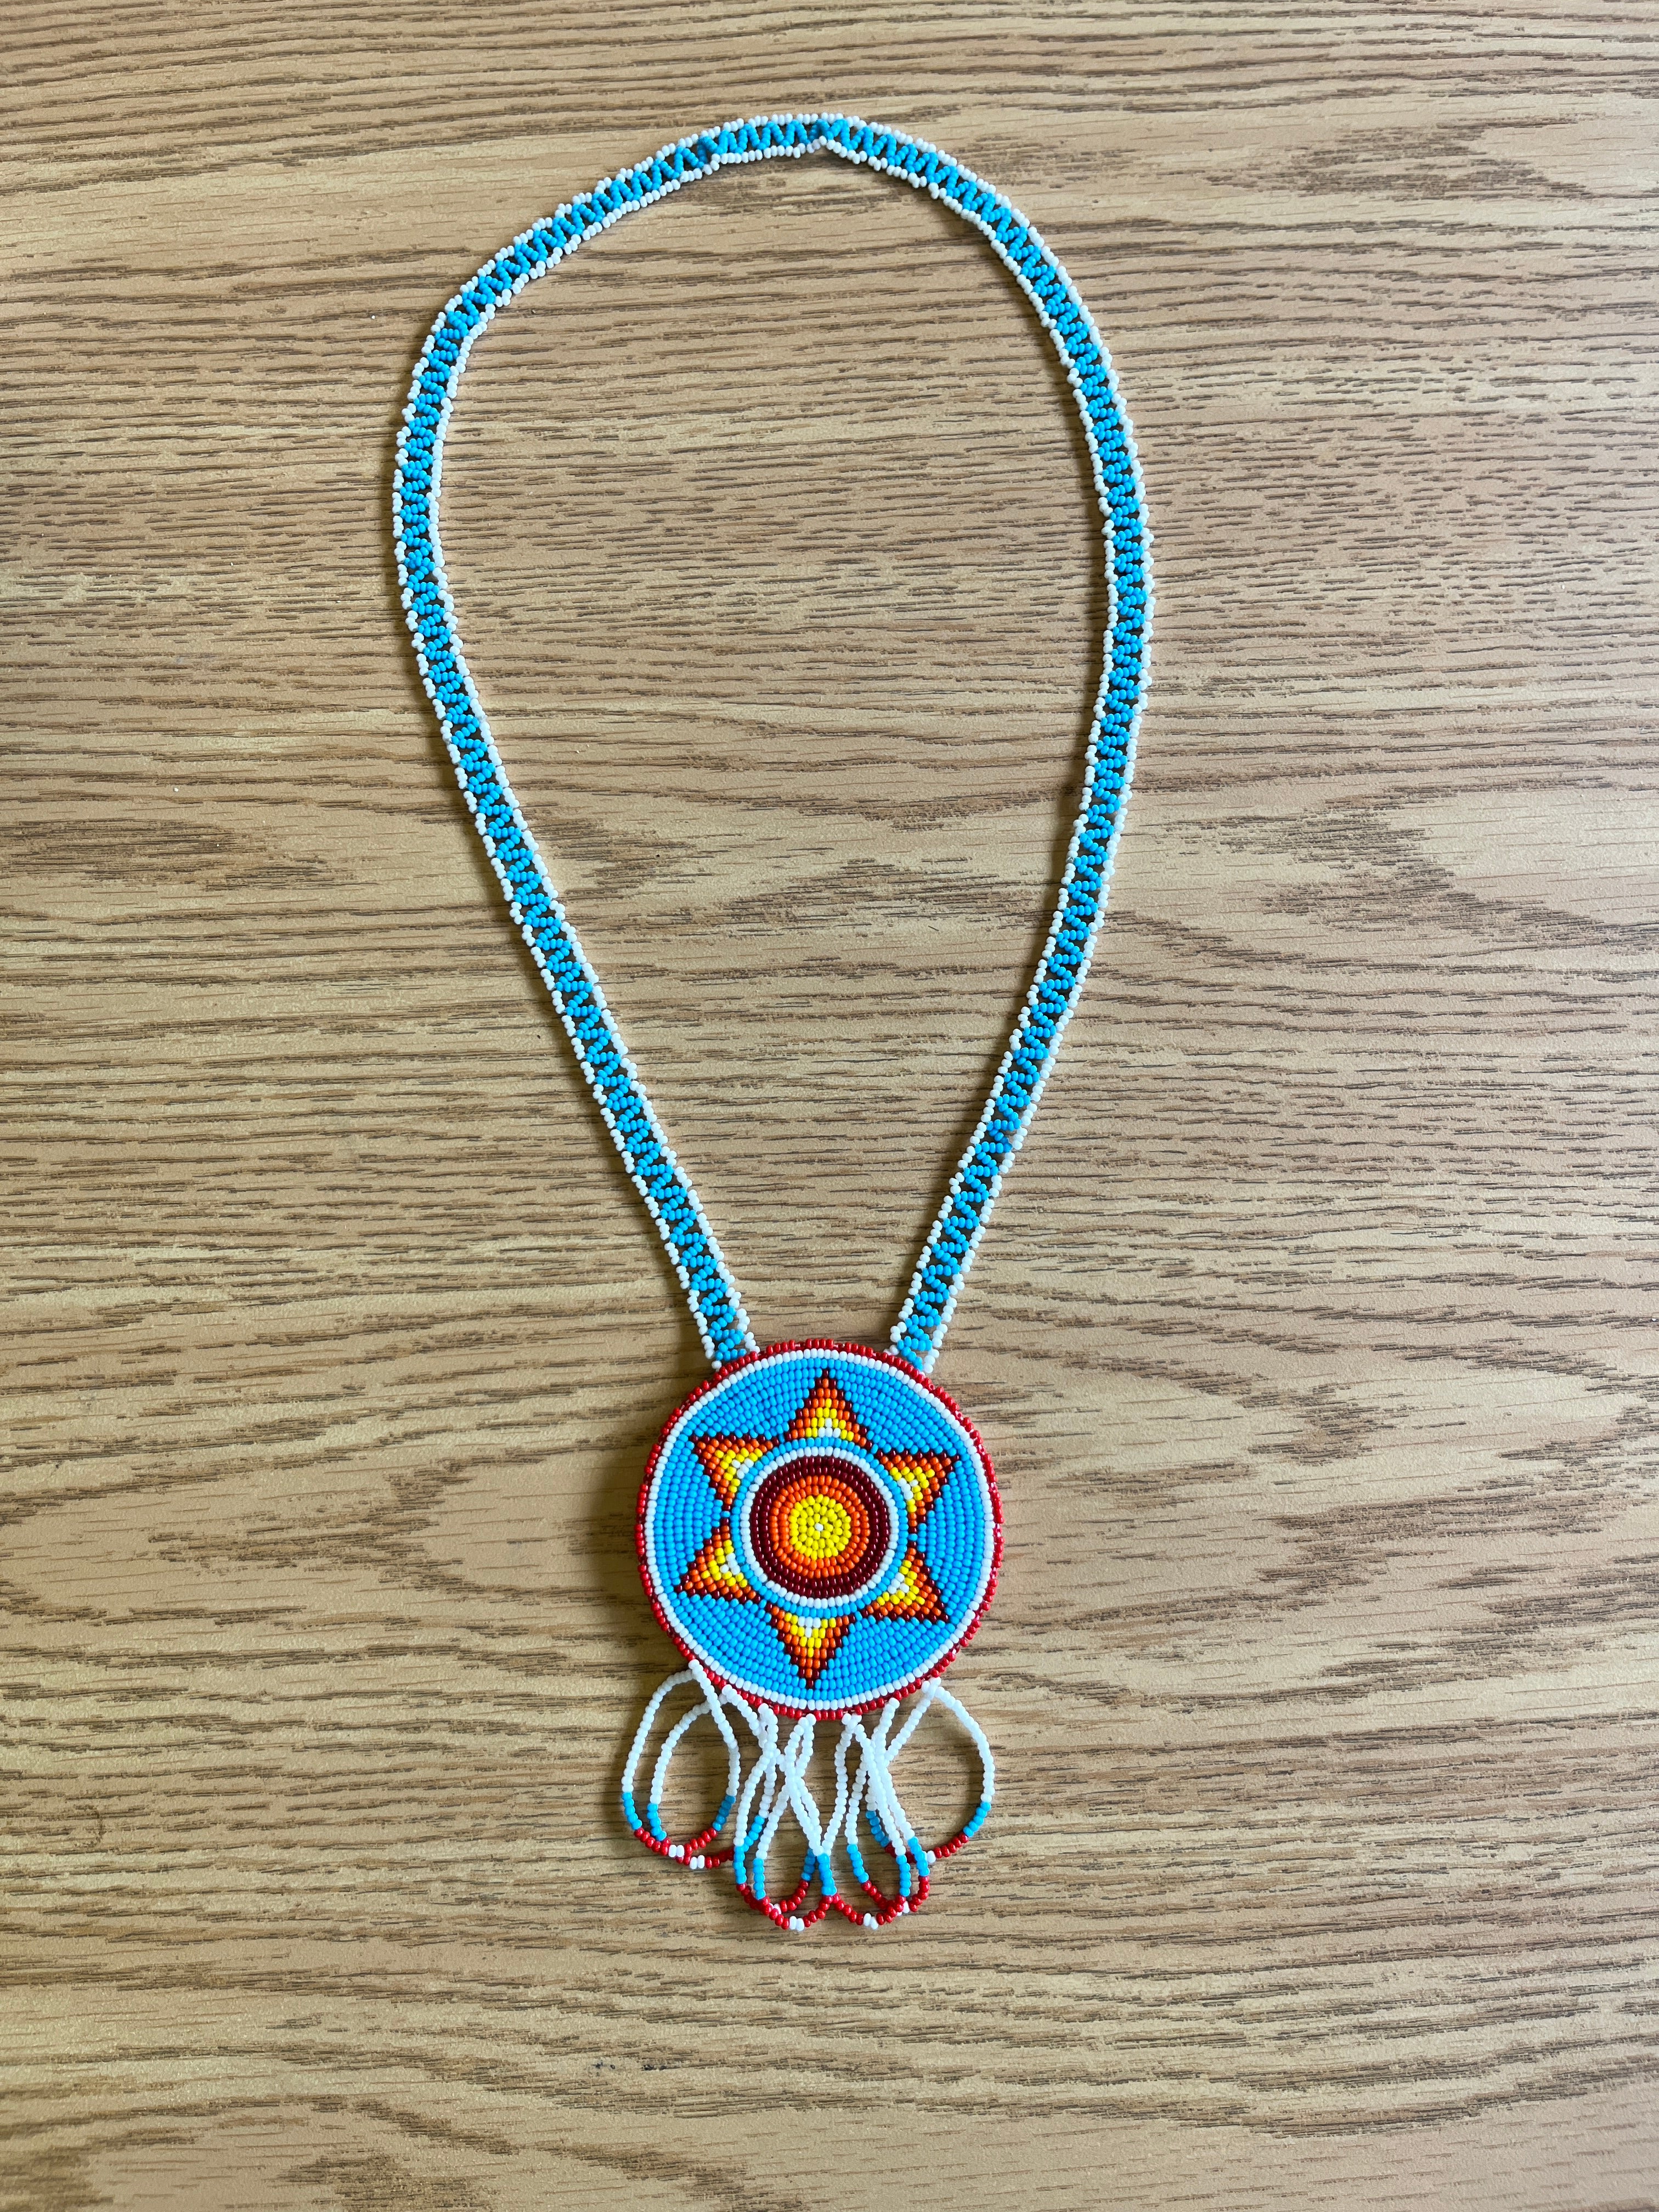 Native American Beaded Medallion/ Native American Jewelry/ Native American  Beadwork/ Beaded Necklace/ Beaded Medallion Necklace - Etsy